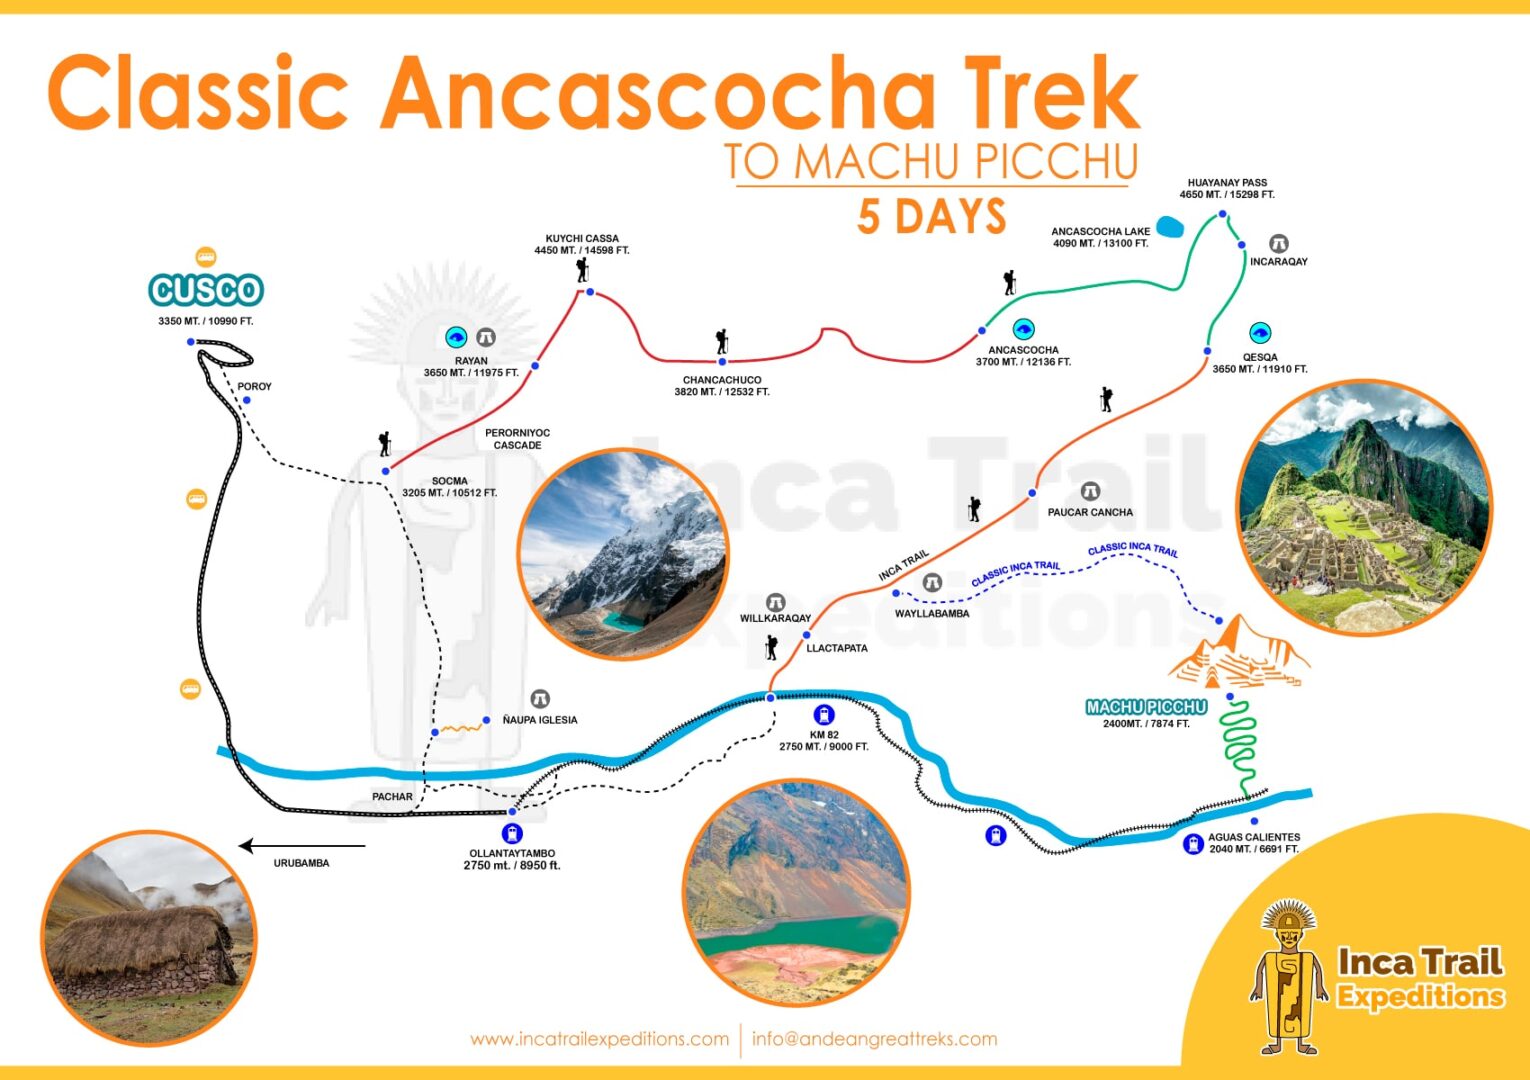 ANCASCOCHA-TREK-TO-MACHUPICCHU-5-DAYS-BY-INCA-TRAIL-EXPEDITIONS